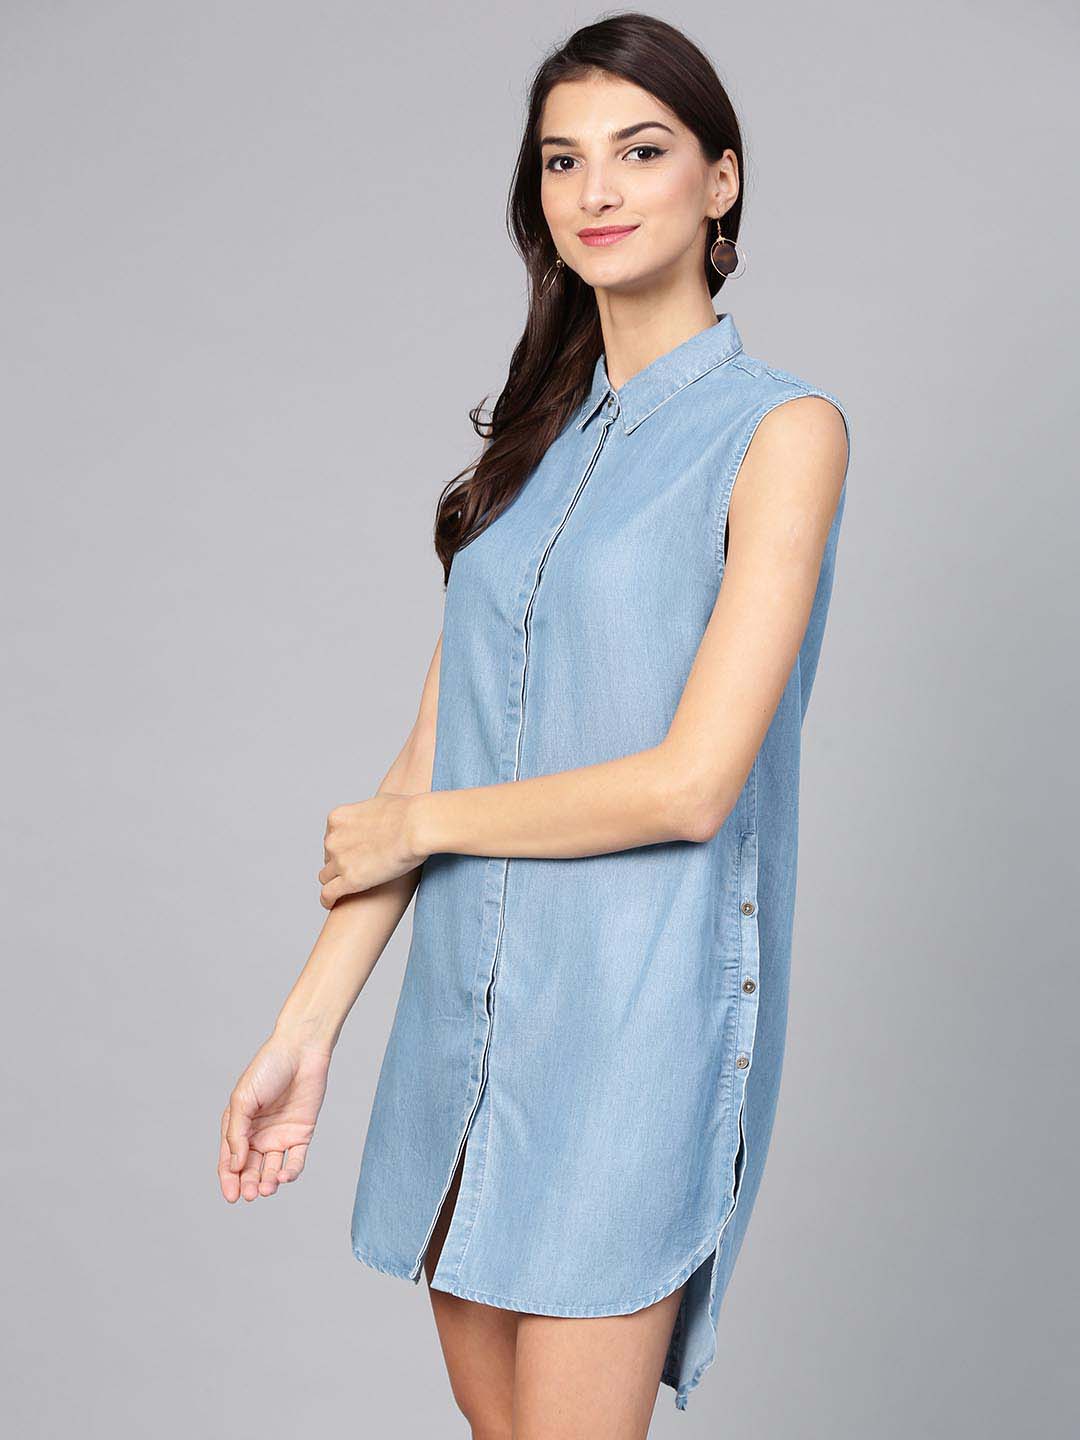 Sleeveless Denim Shirt products for sale | eBay